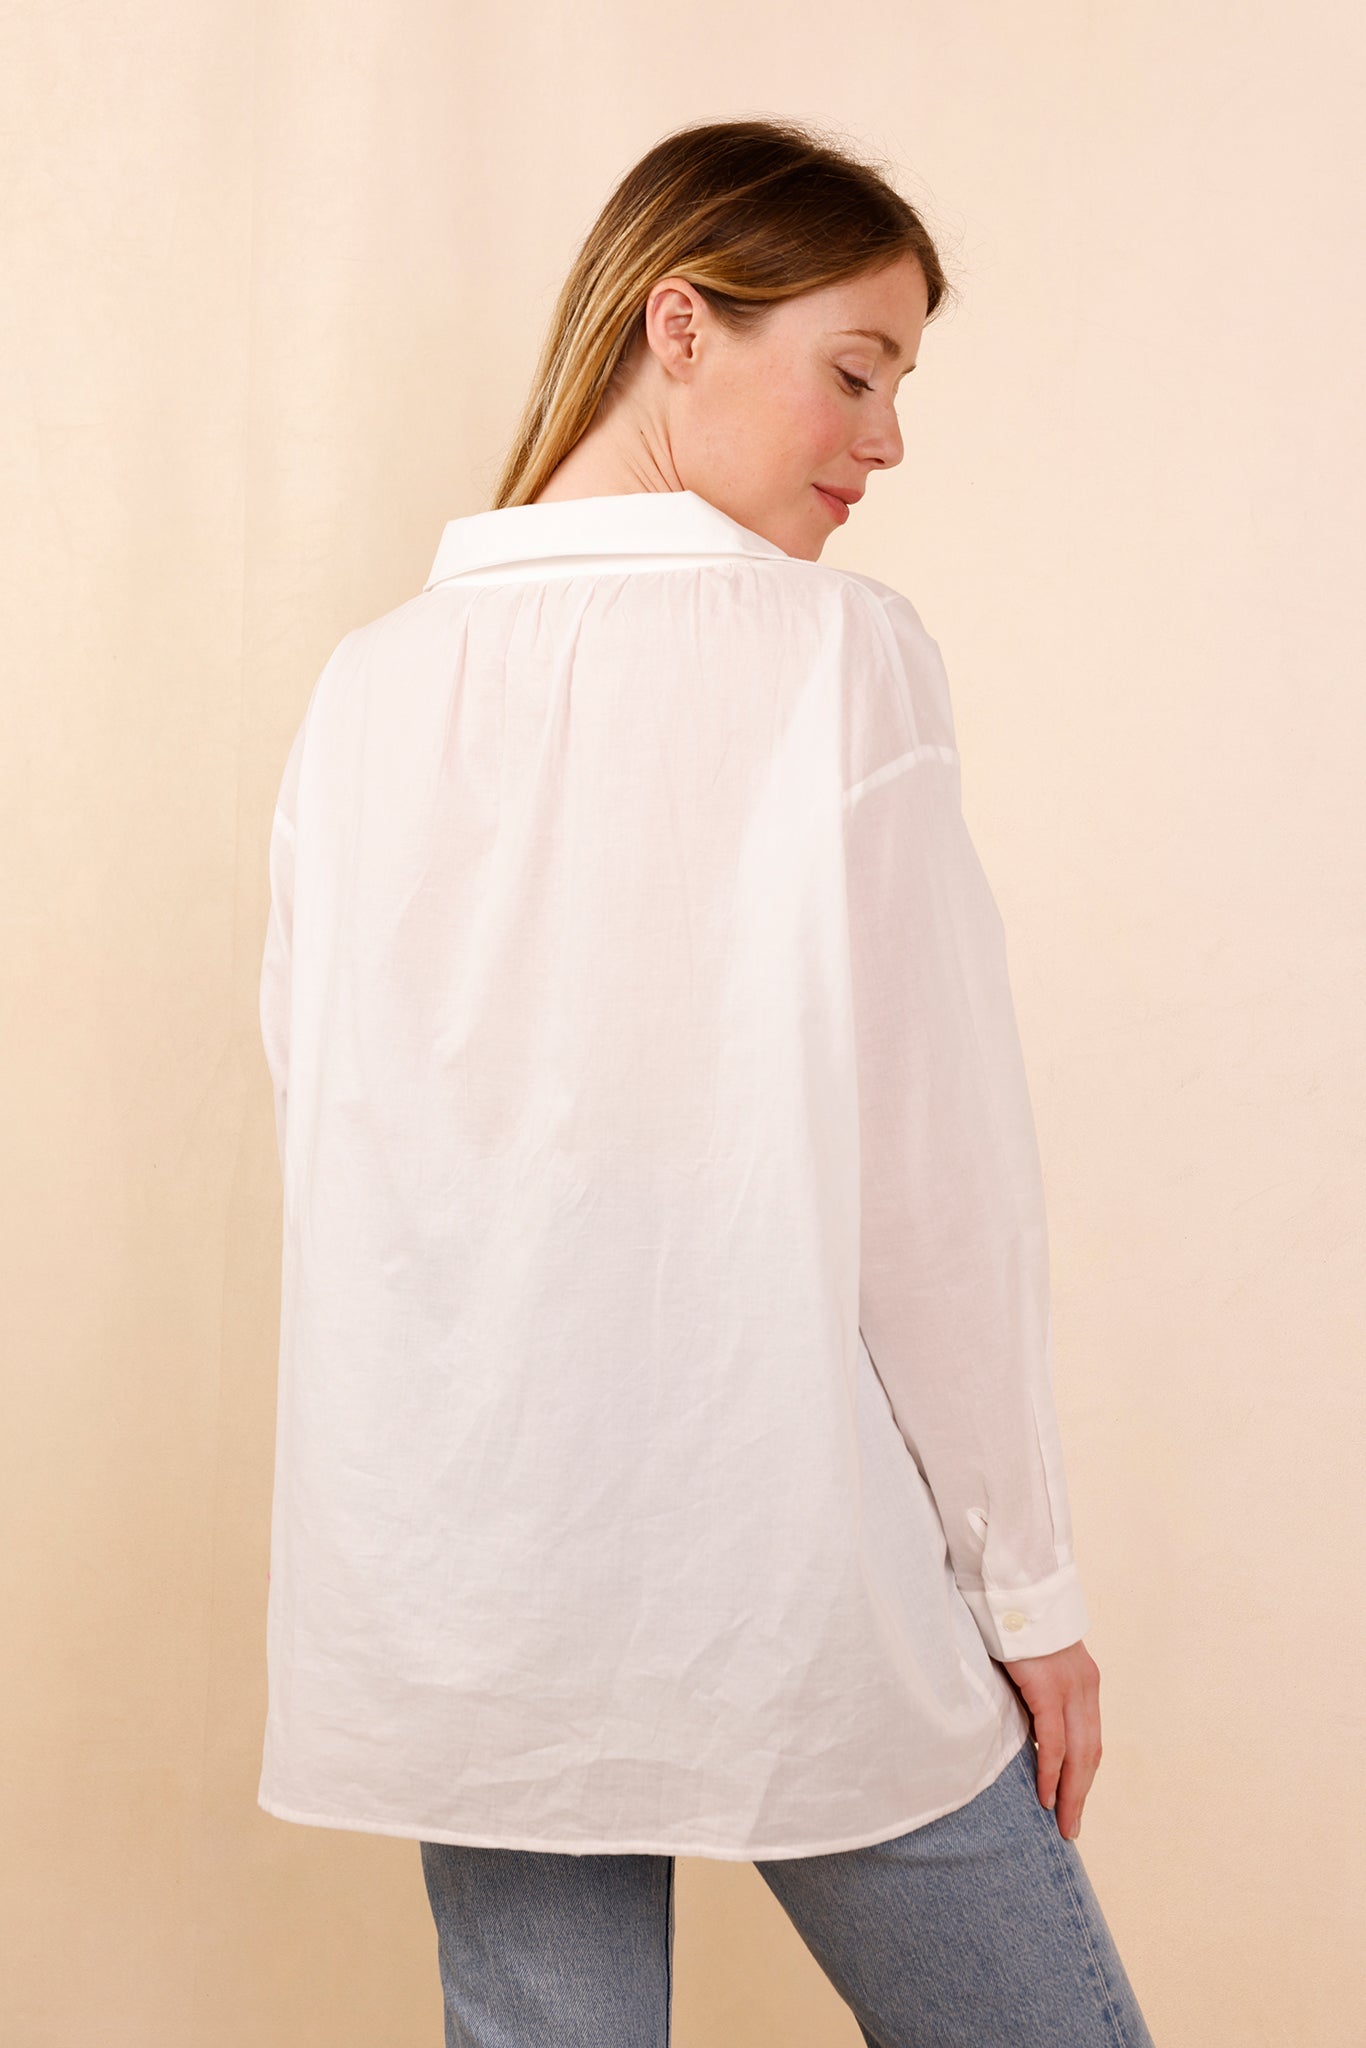 ASANA Shirt - 100% Cotton Voile